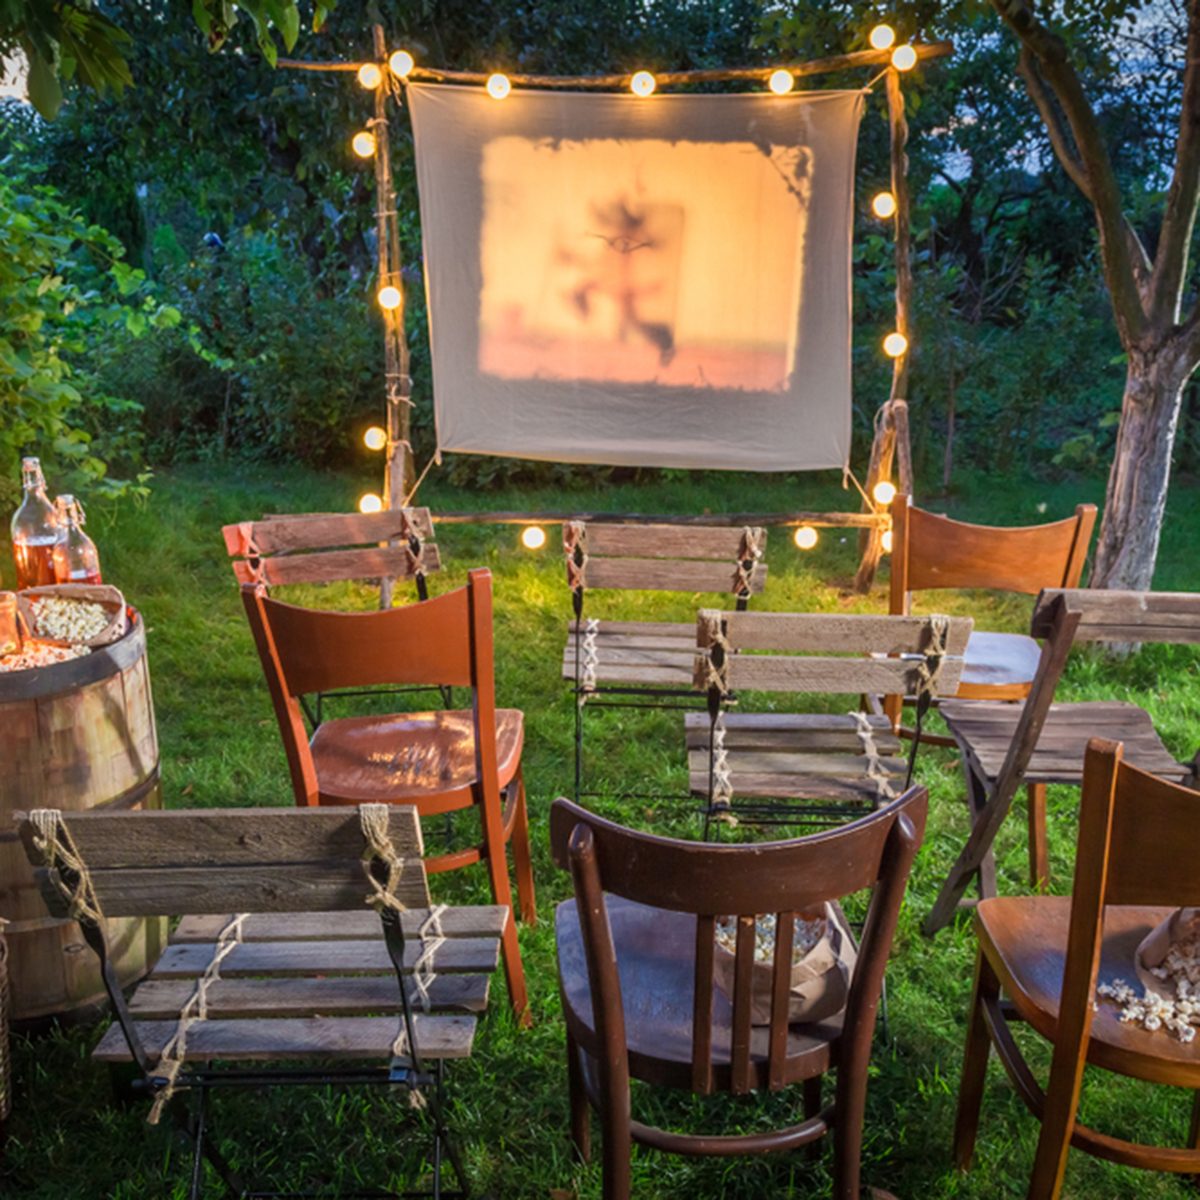 10 Fun Ideas For Outdoor Movie Night